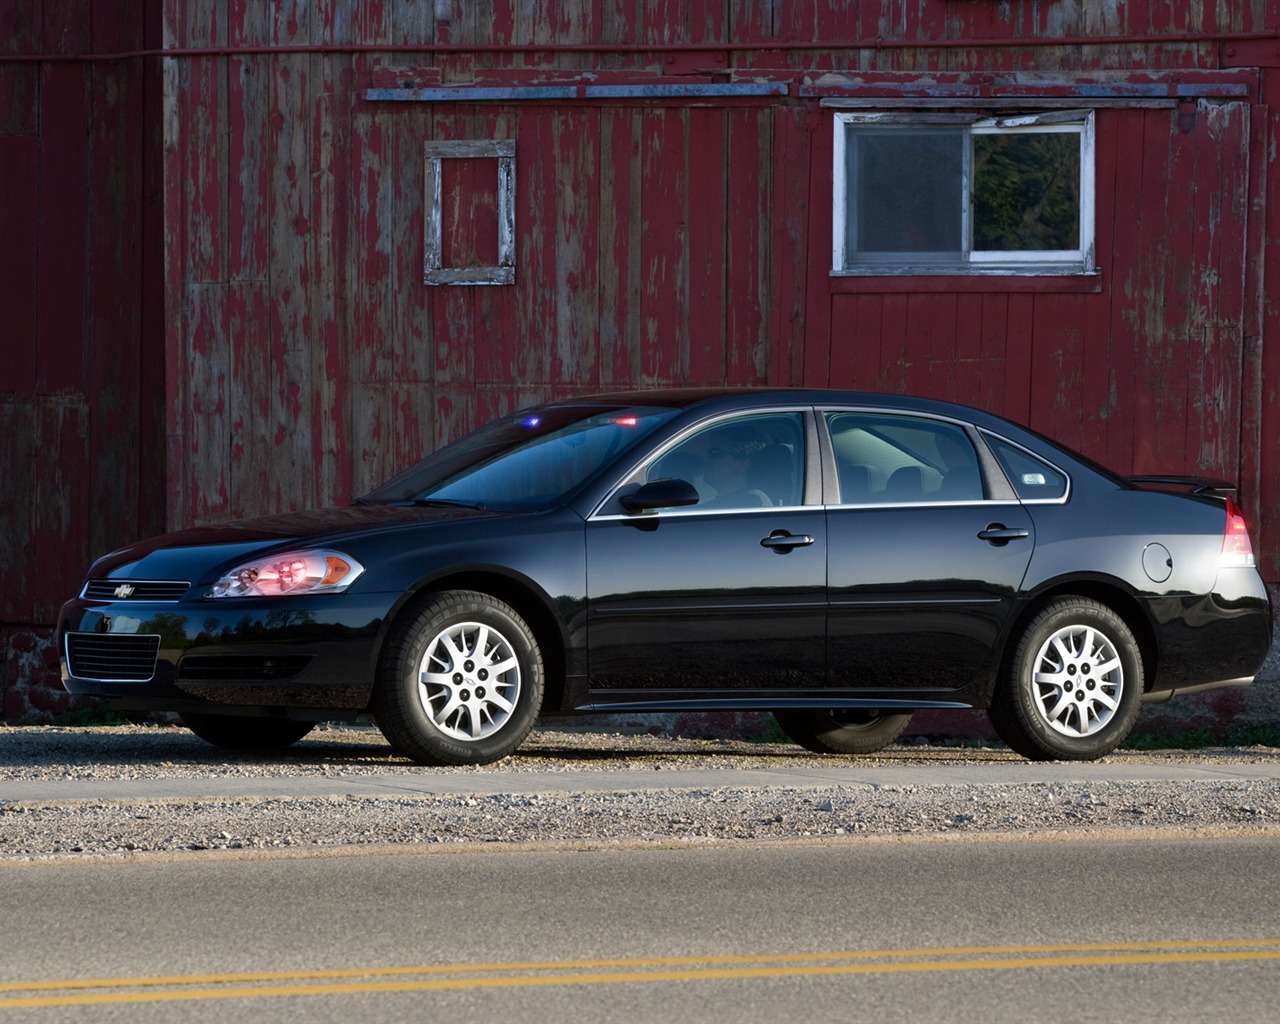 Chevrolet Impala Police Vehicle - 2011 雪佛兰8 - 1280x1024